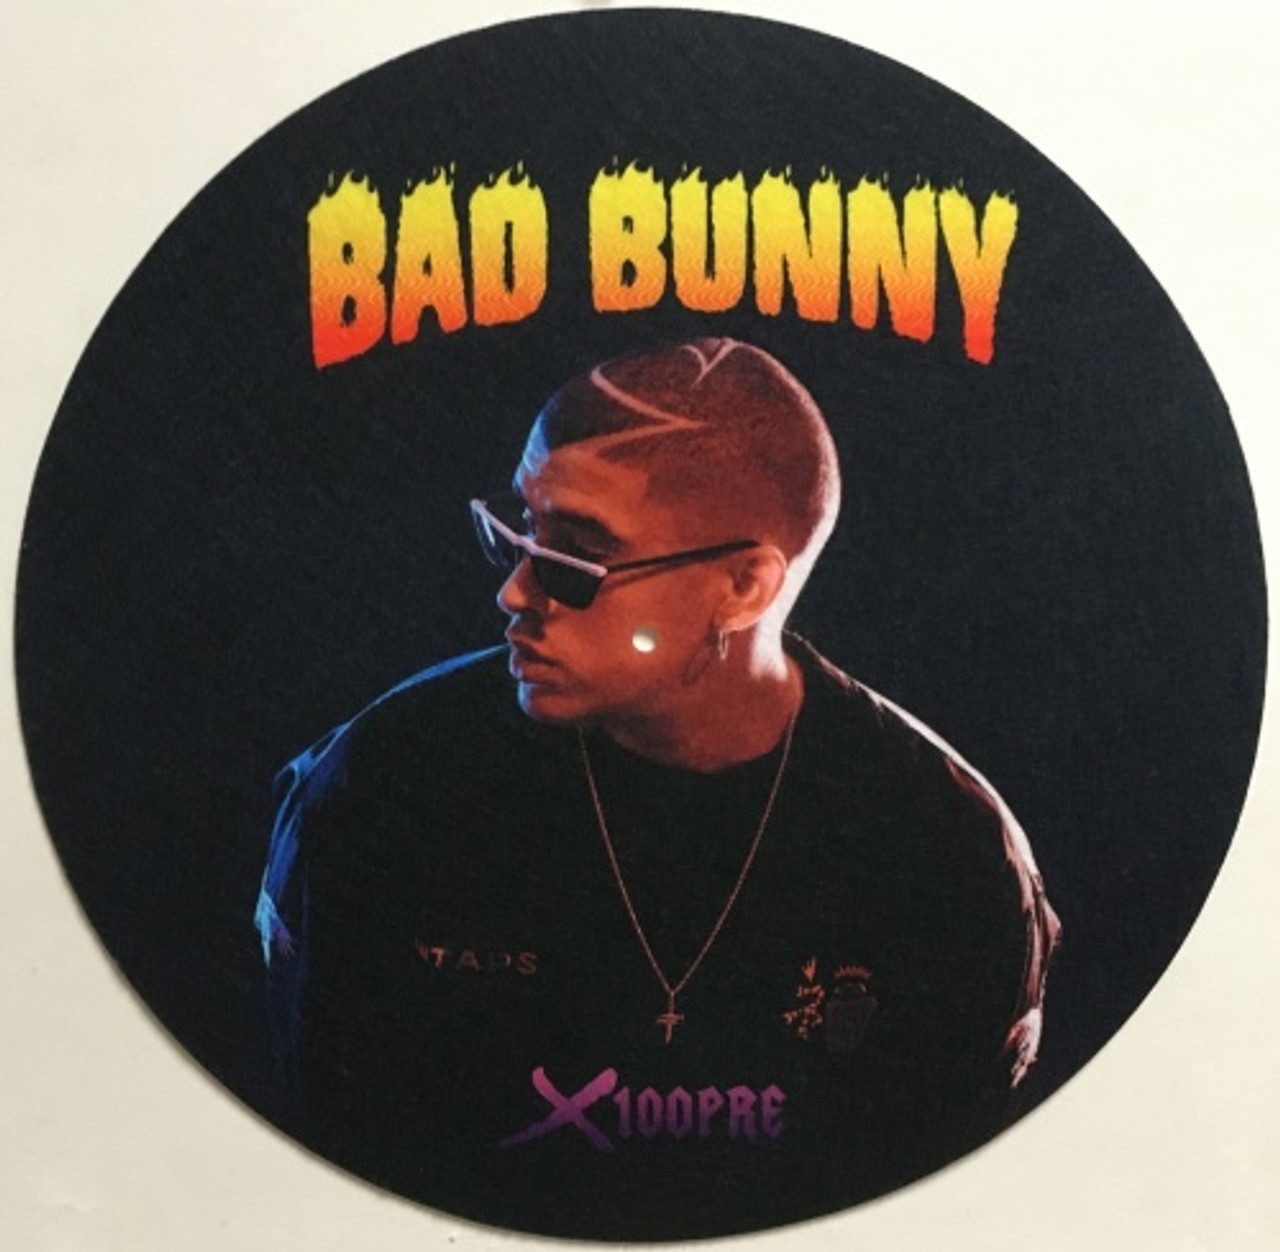 Bad Bunny X 100pre Single Slipmat Ear Candy Music